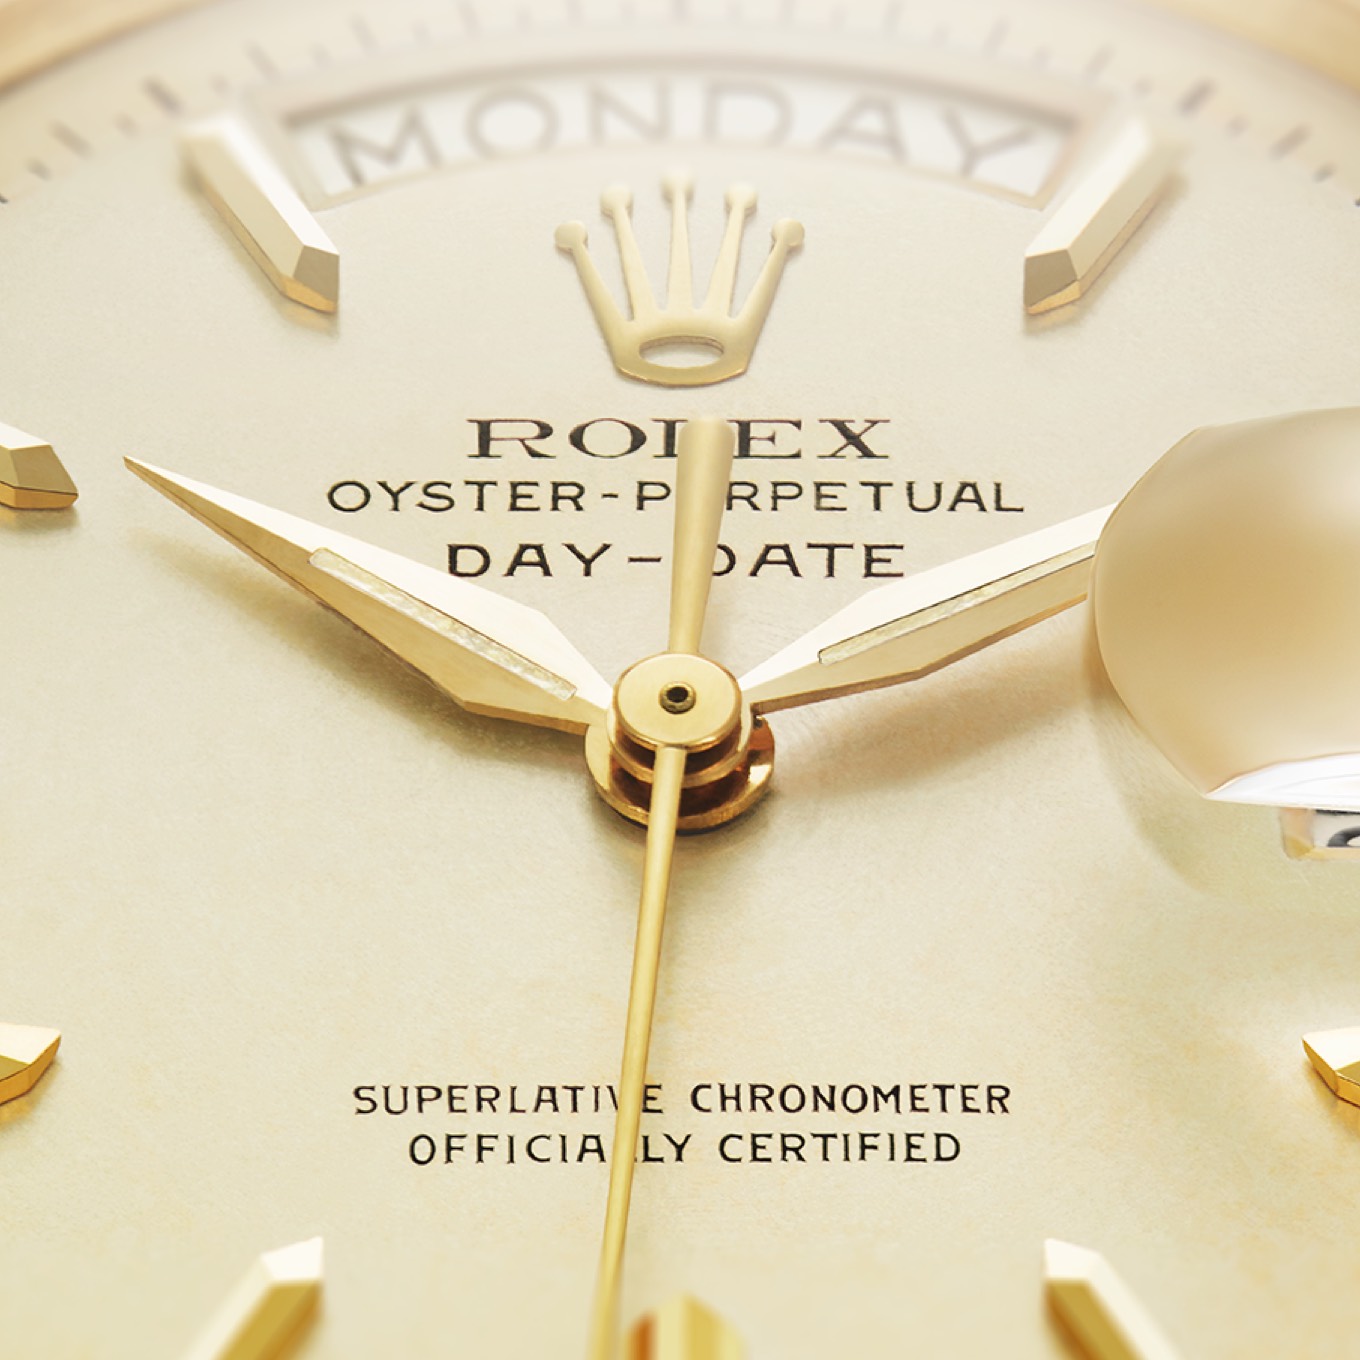 Superlative chronometric precision of a Rolex Day-Date